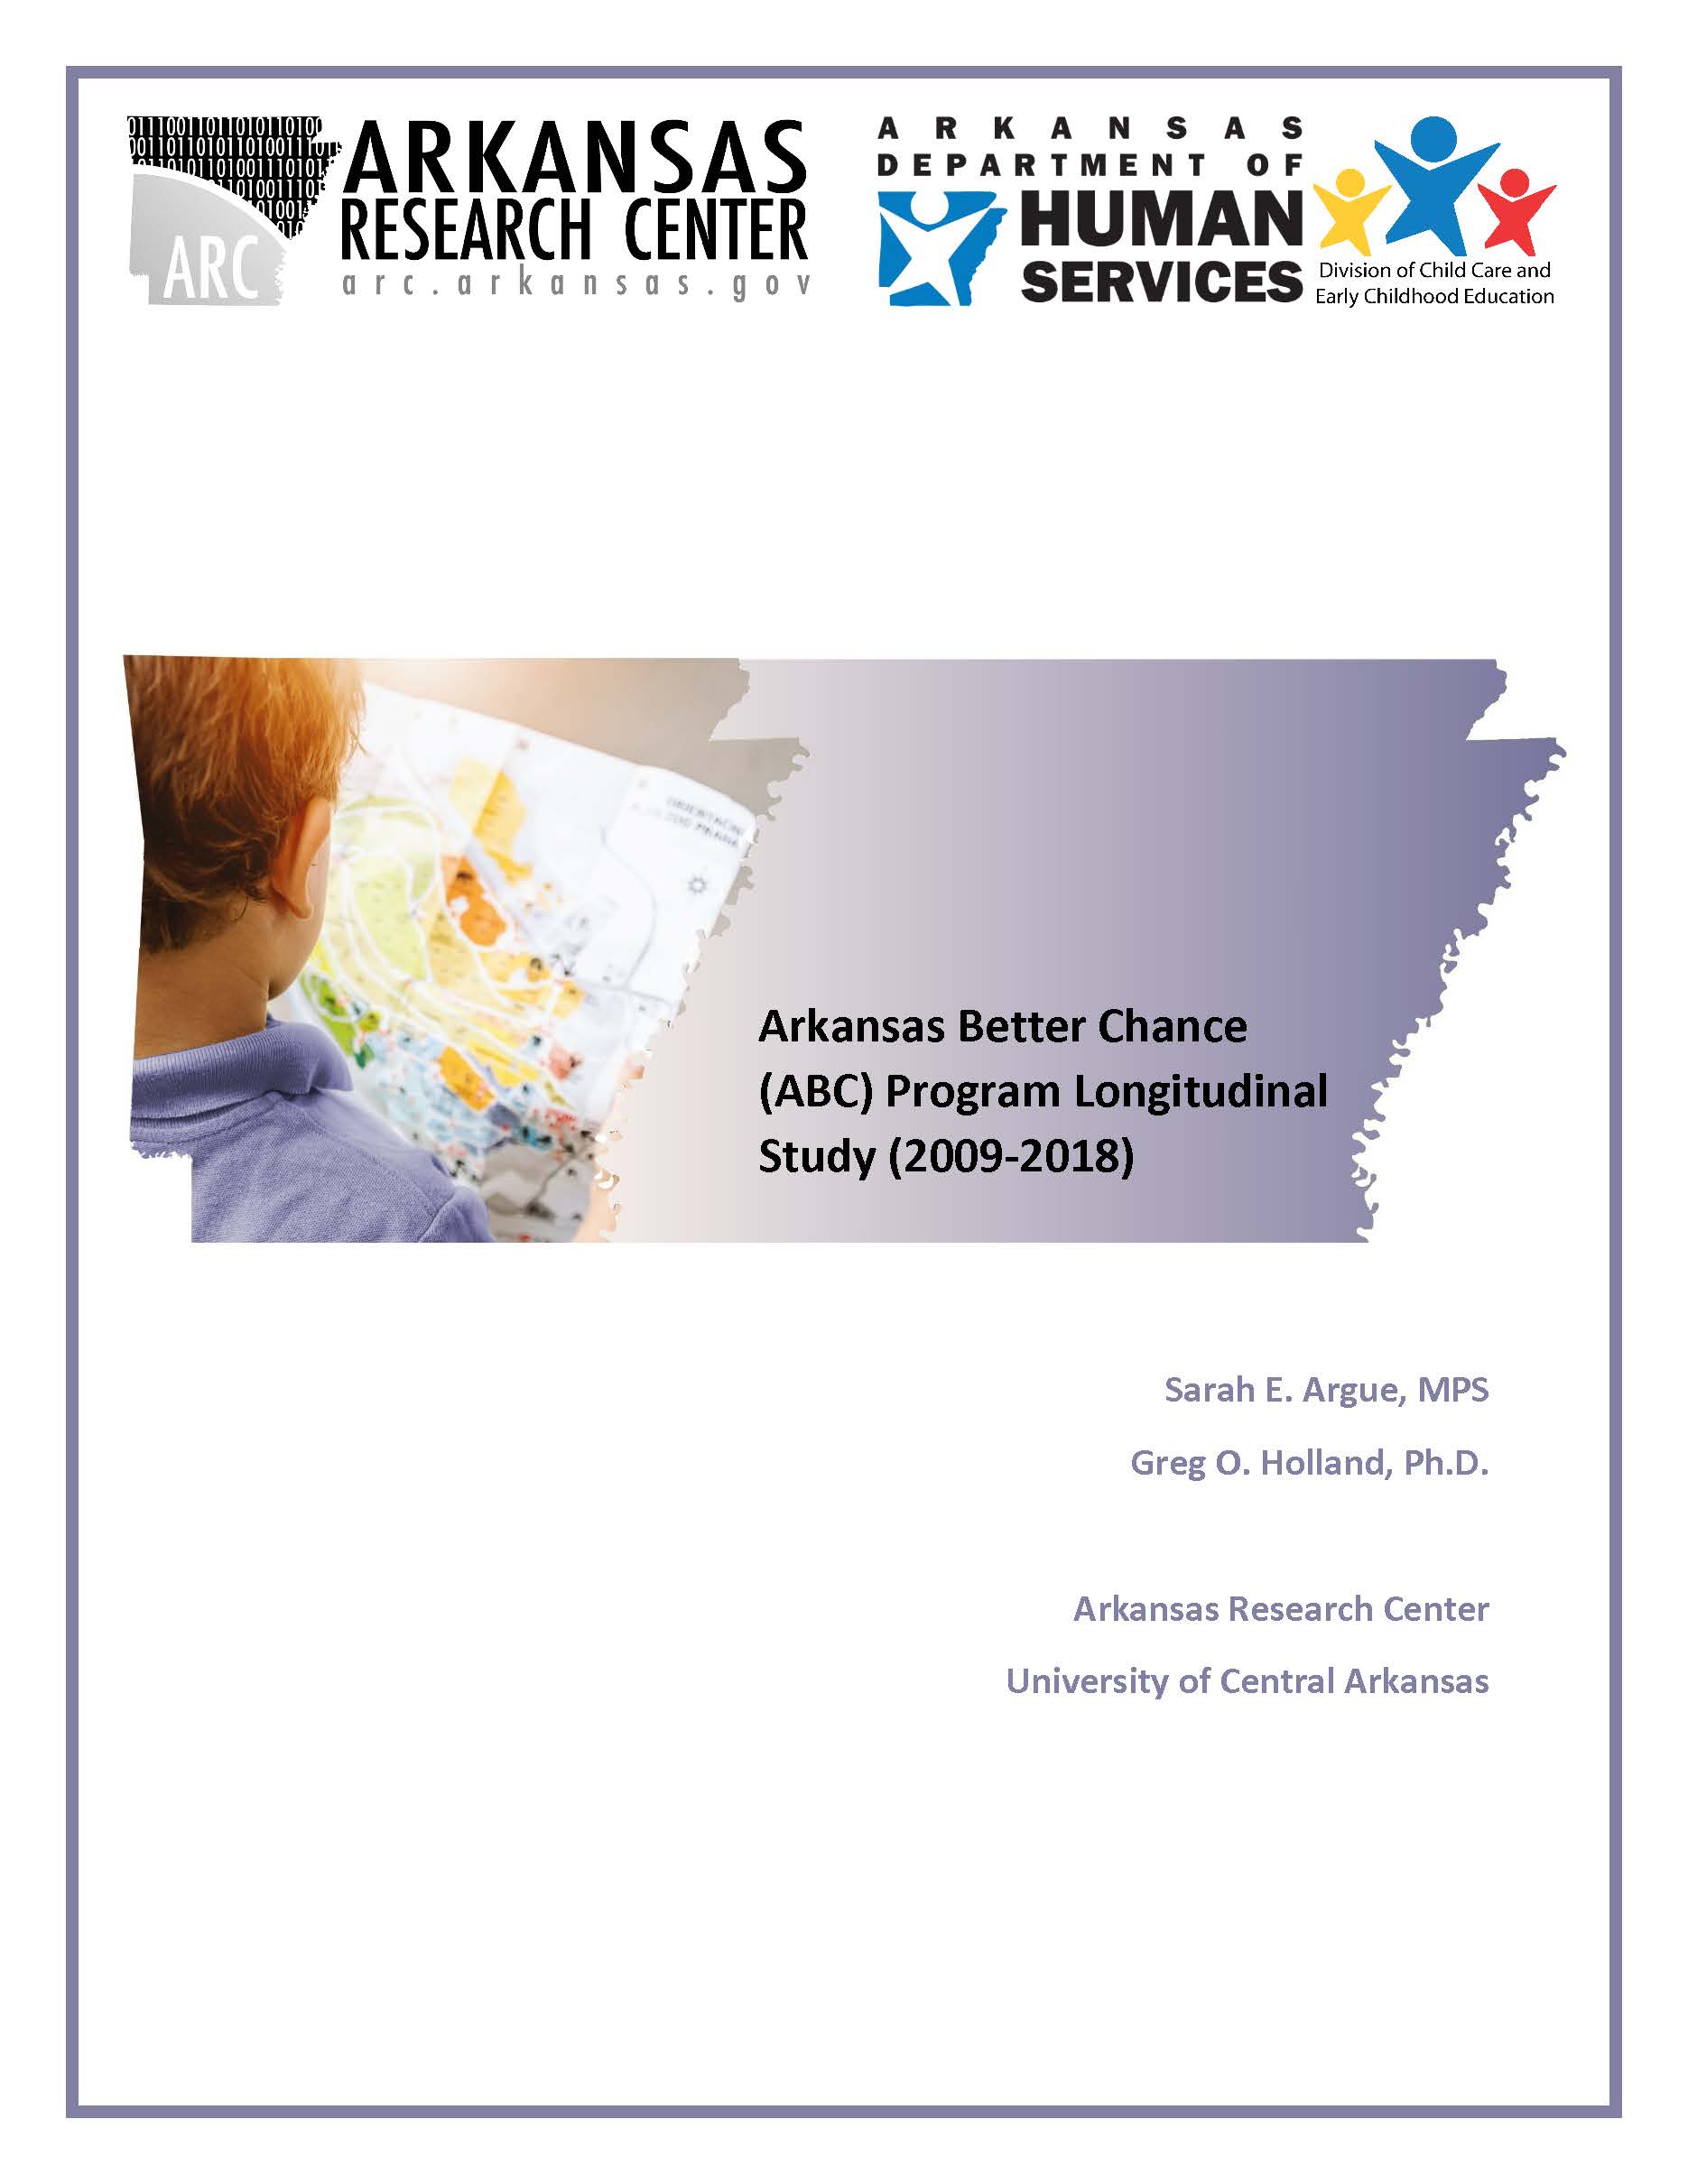 Arkansas Better Chance (ABC) Program Longitudinal Study (2009-2018)